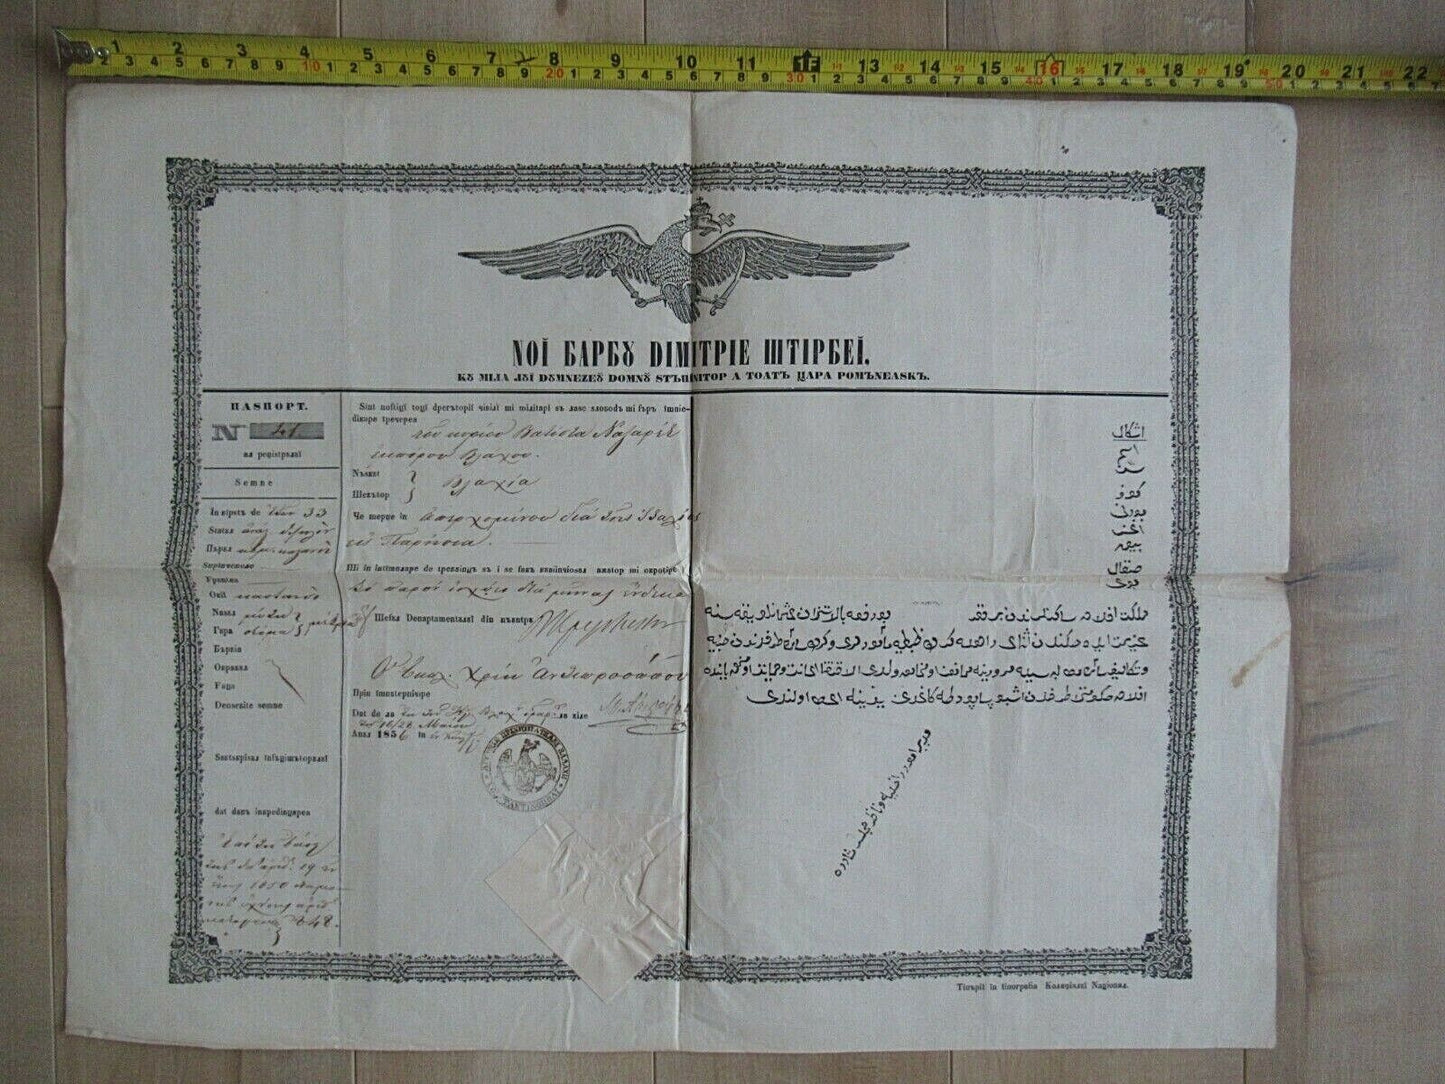 ROMANIA WALLACHIA 1856 PASSPORT DIMITRIE STIRBEI RULE. RARE!!! TYPE 2.